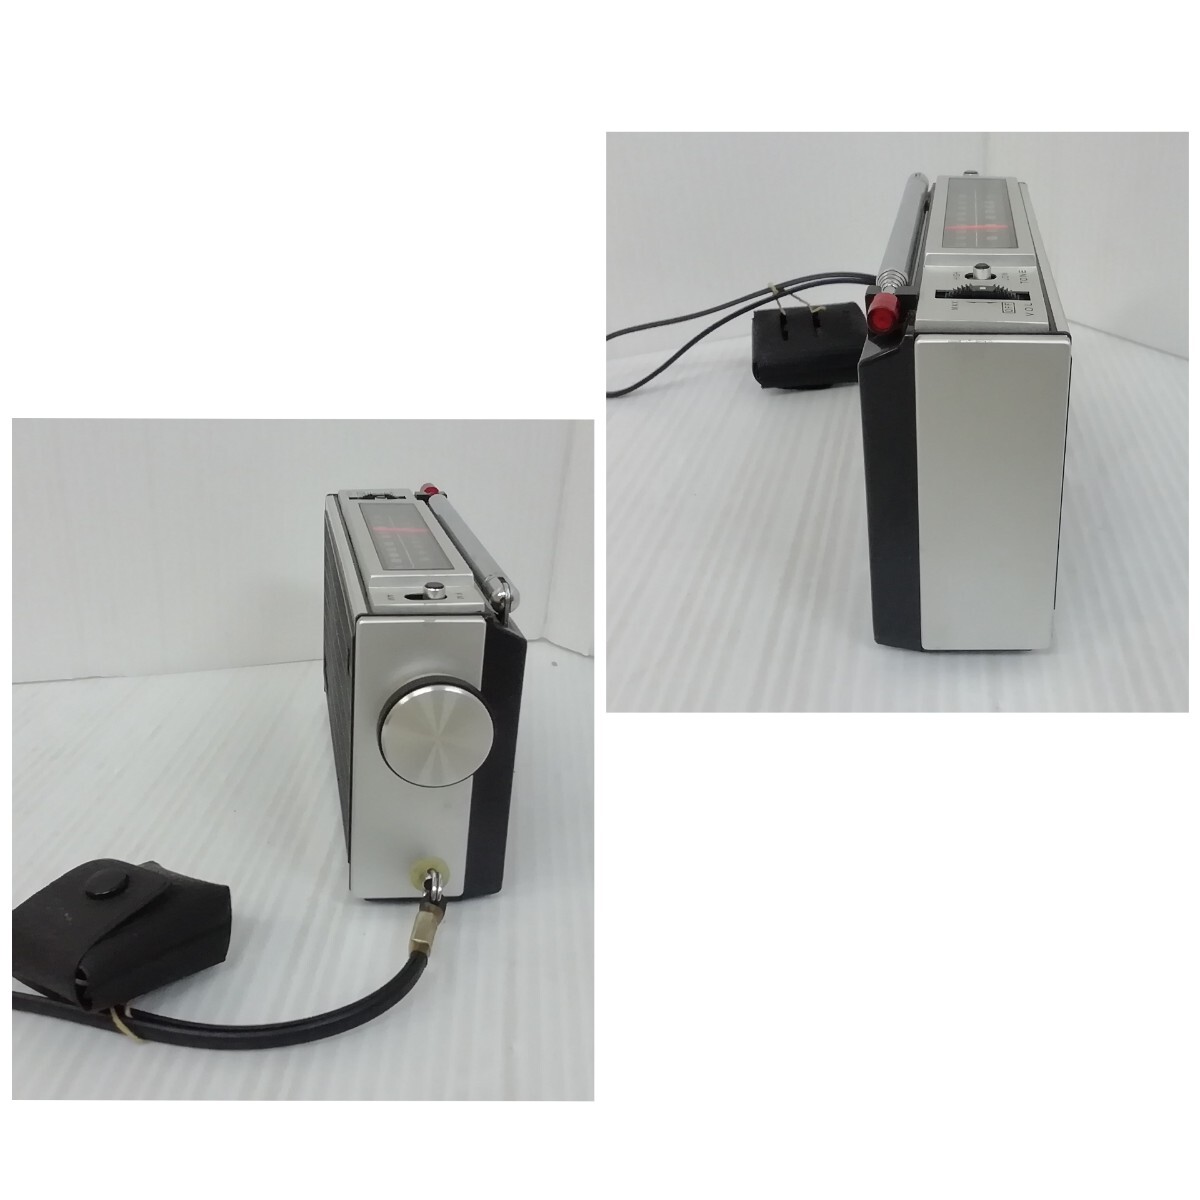  present condition goods Showa Retro antique radio SONY ICF-250 AIWA SOLID STATE 2 piece set portable radio Sony Aiwa Junk 